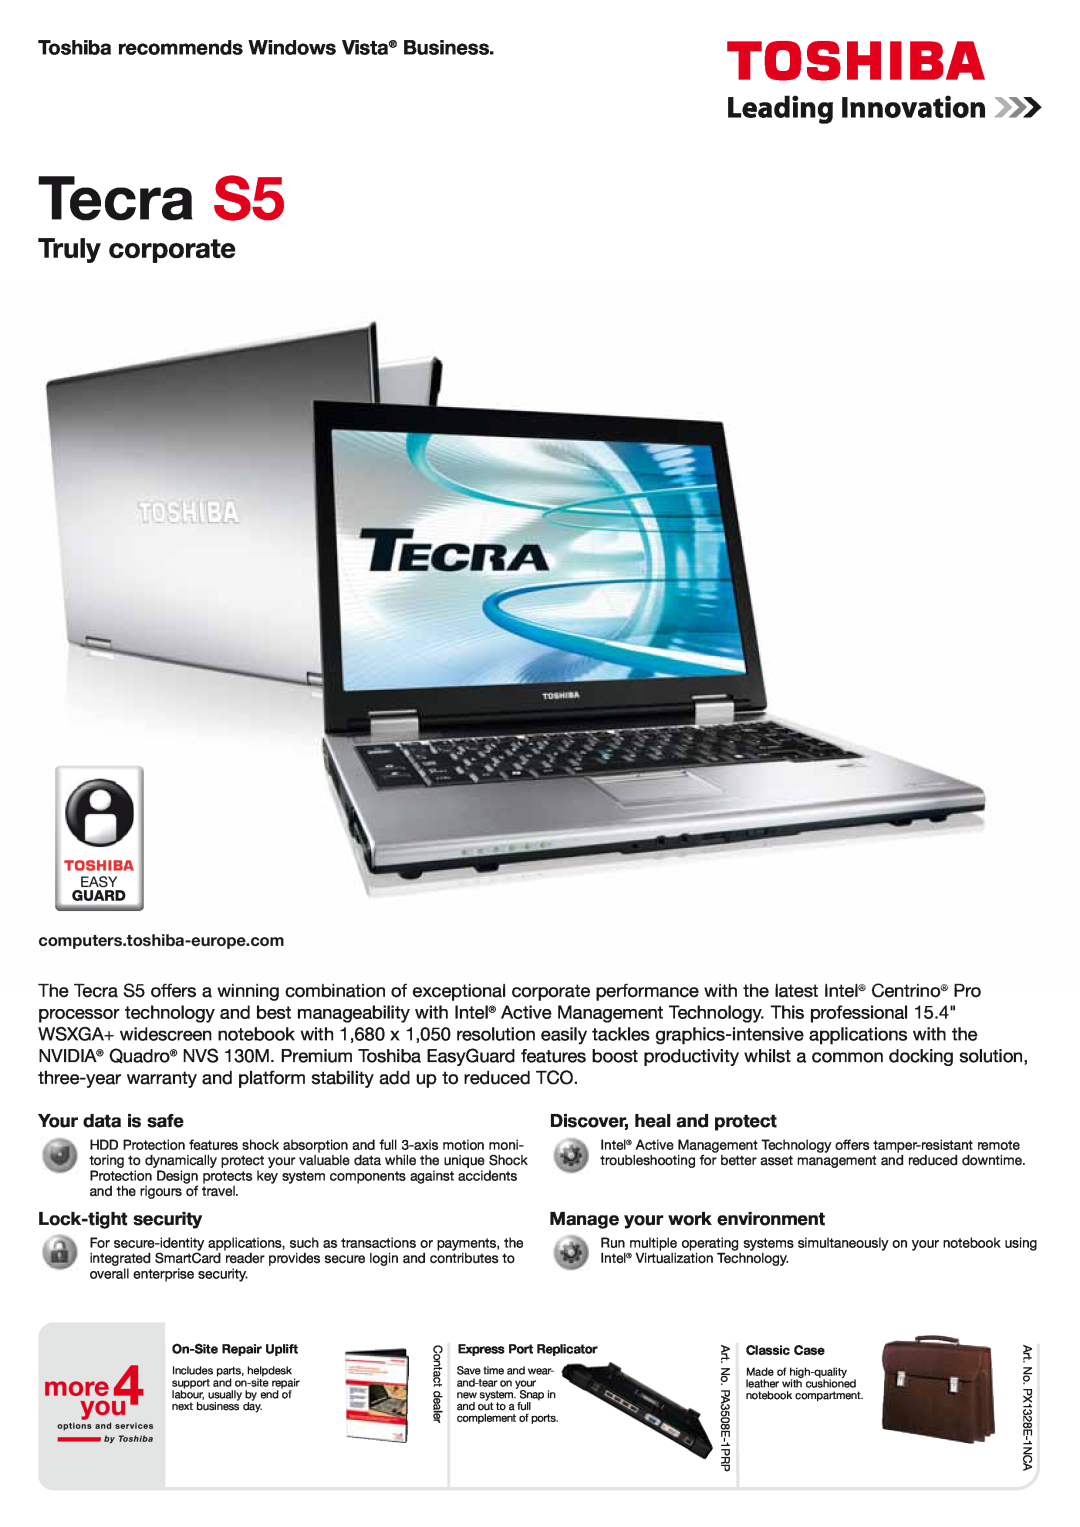 Intel TECRA S5 warranty Toshiba recommends Windows Vista Business, Tecra S5, Truly corporate, Your data is safe 